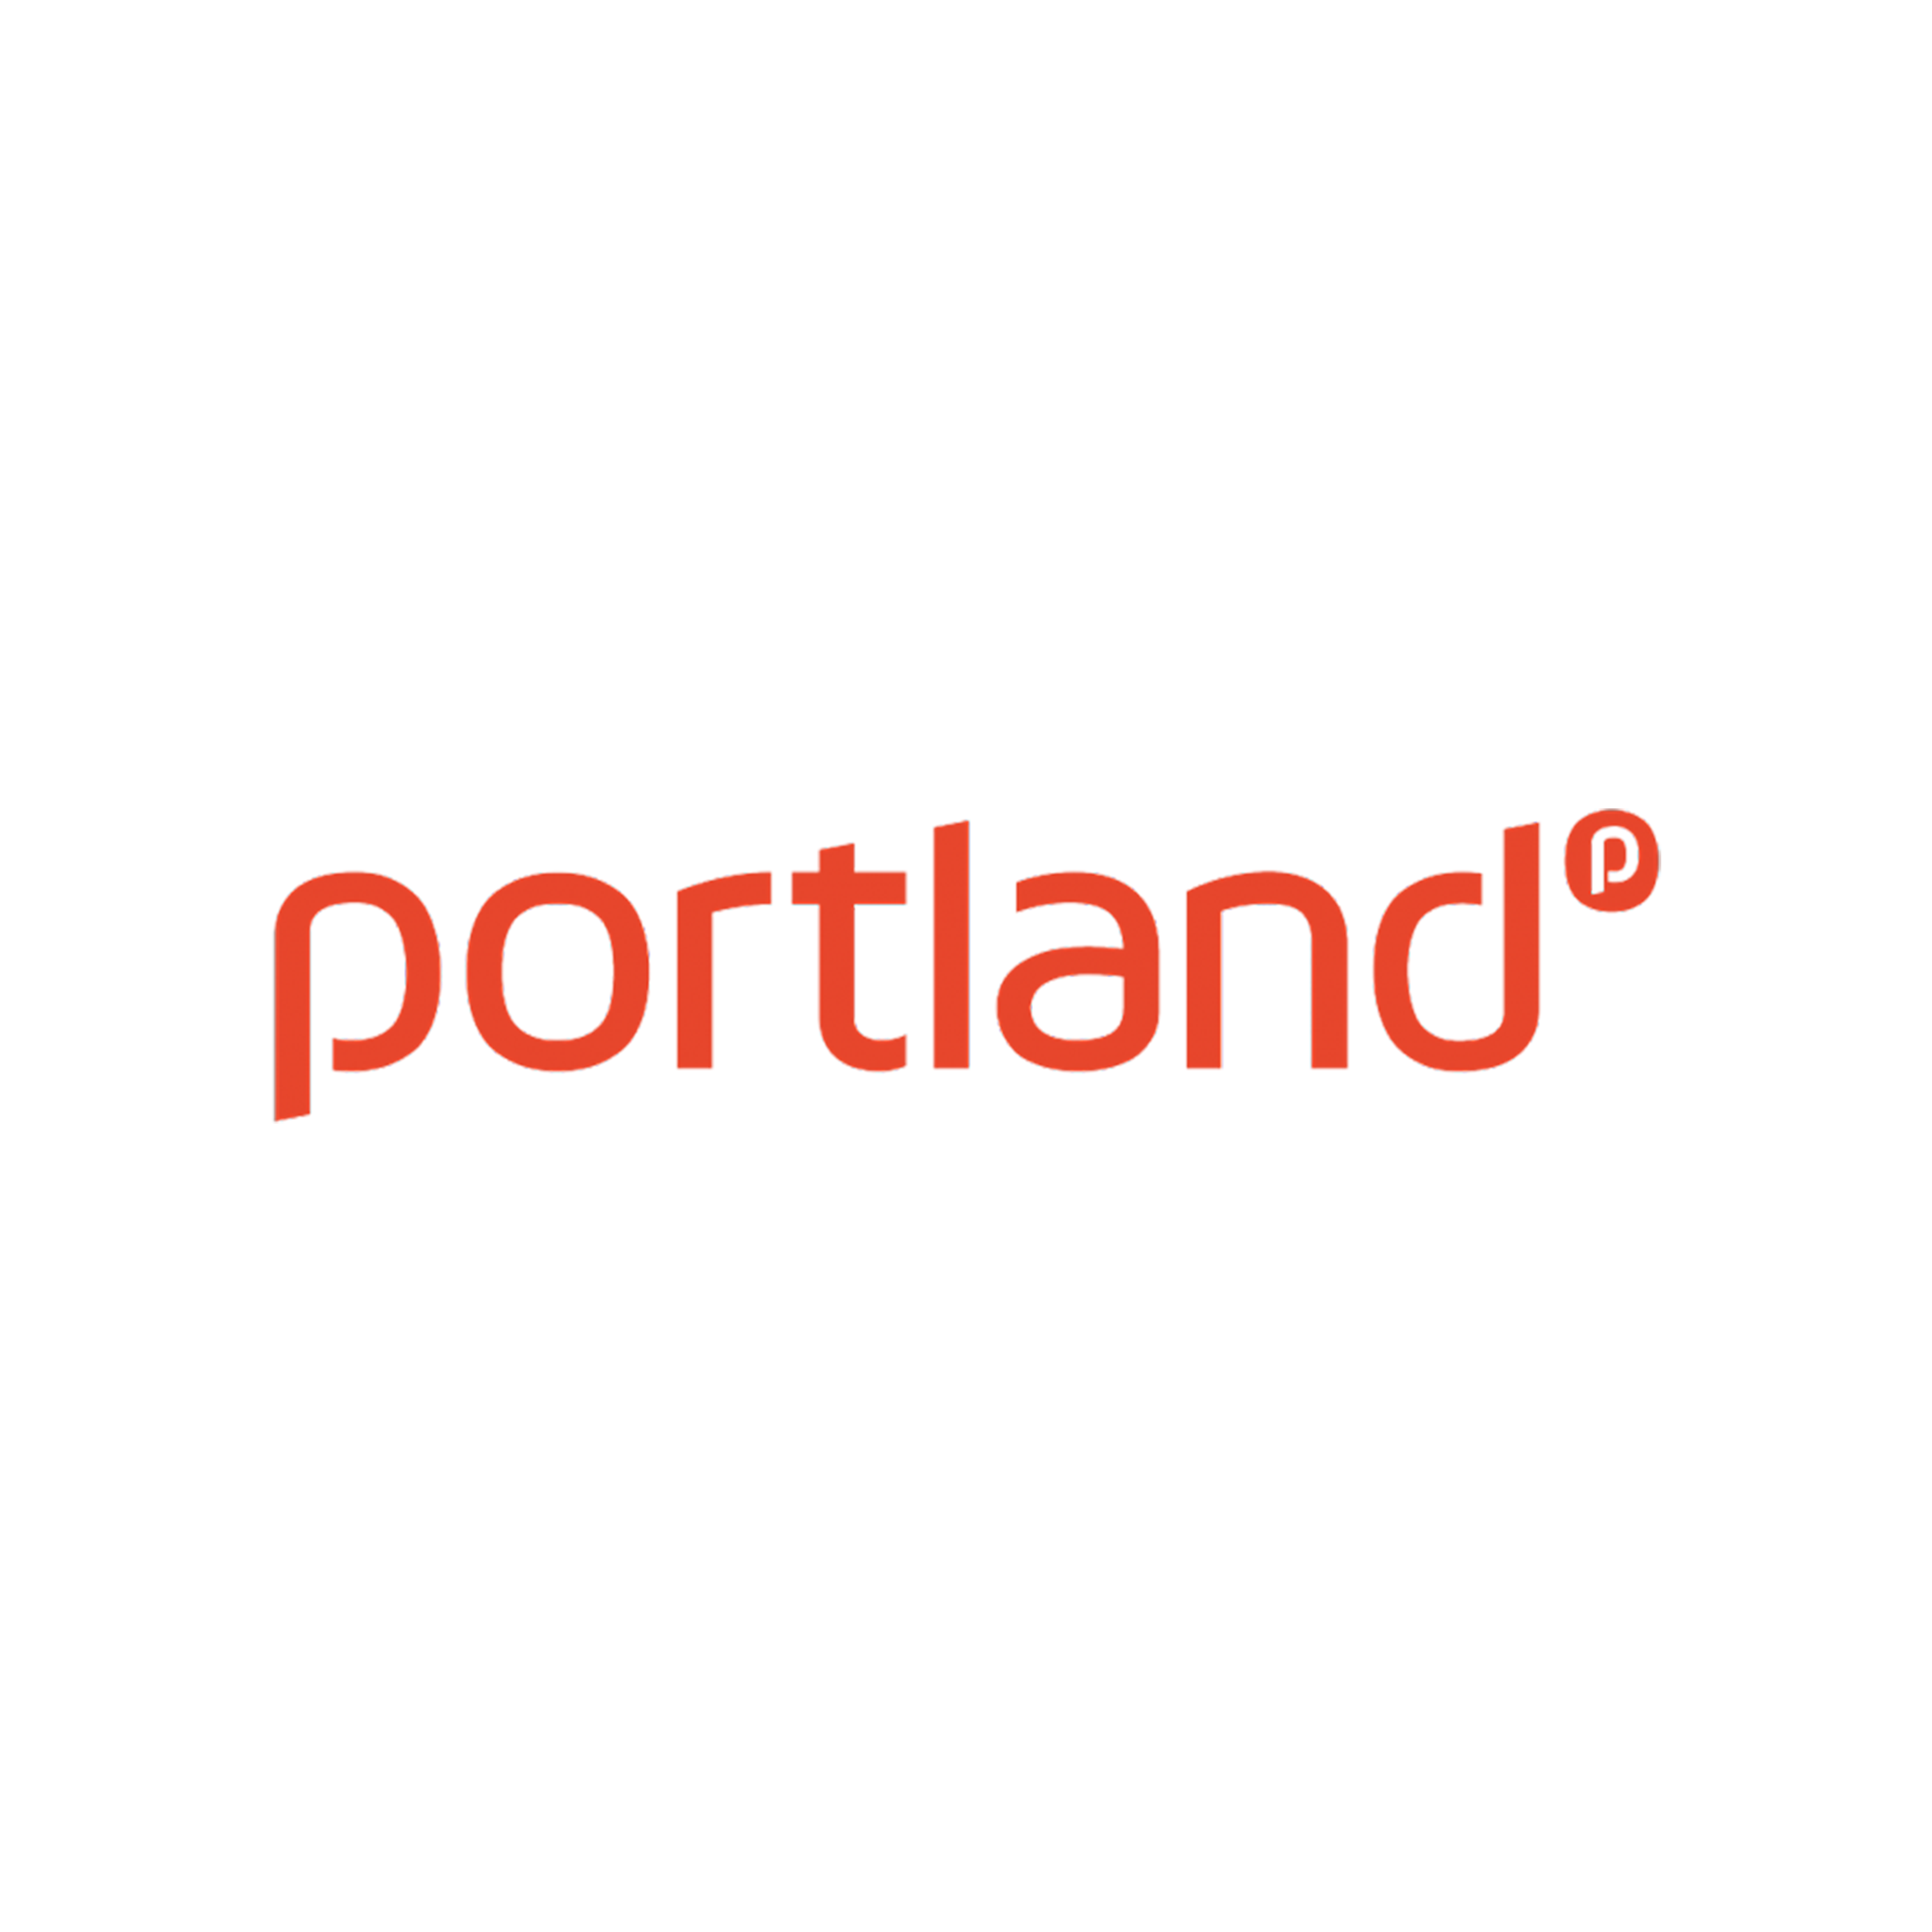 Logo Portland